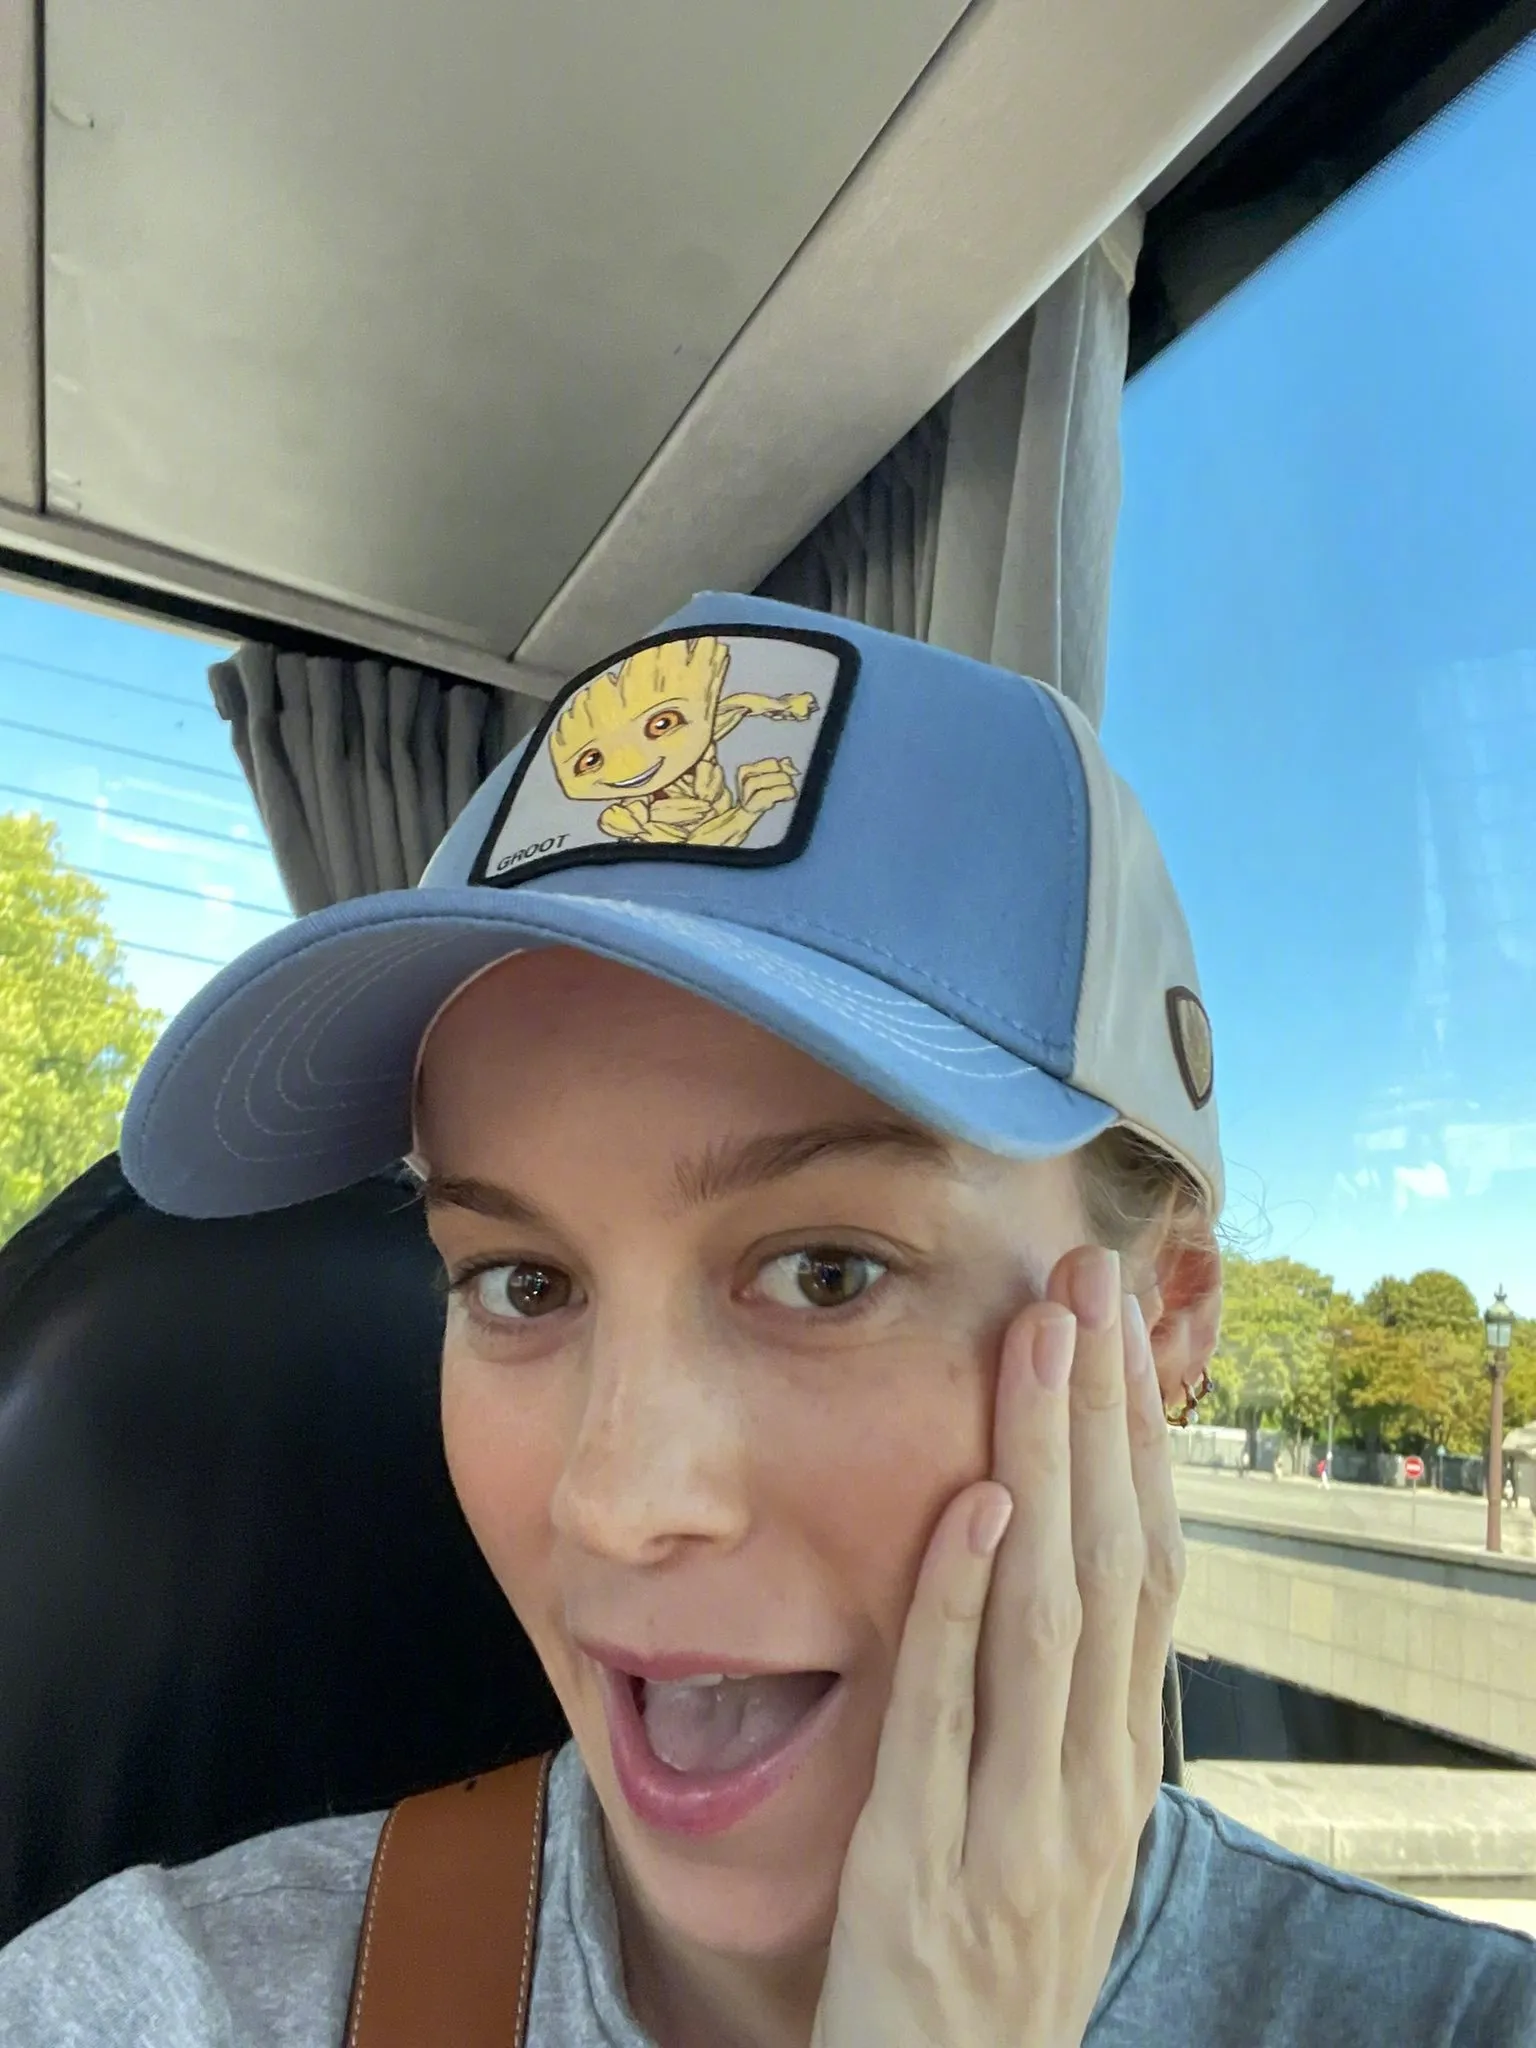 Brie Larson wearing a Groot merch hat | FMV6